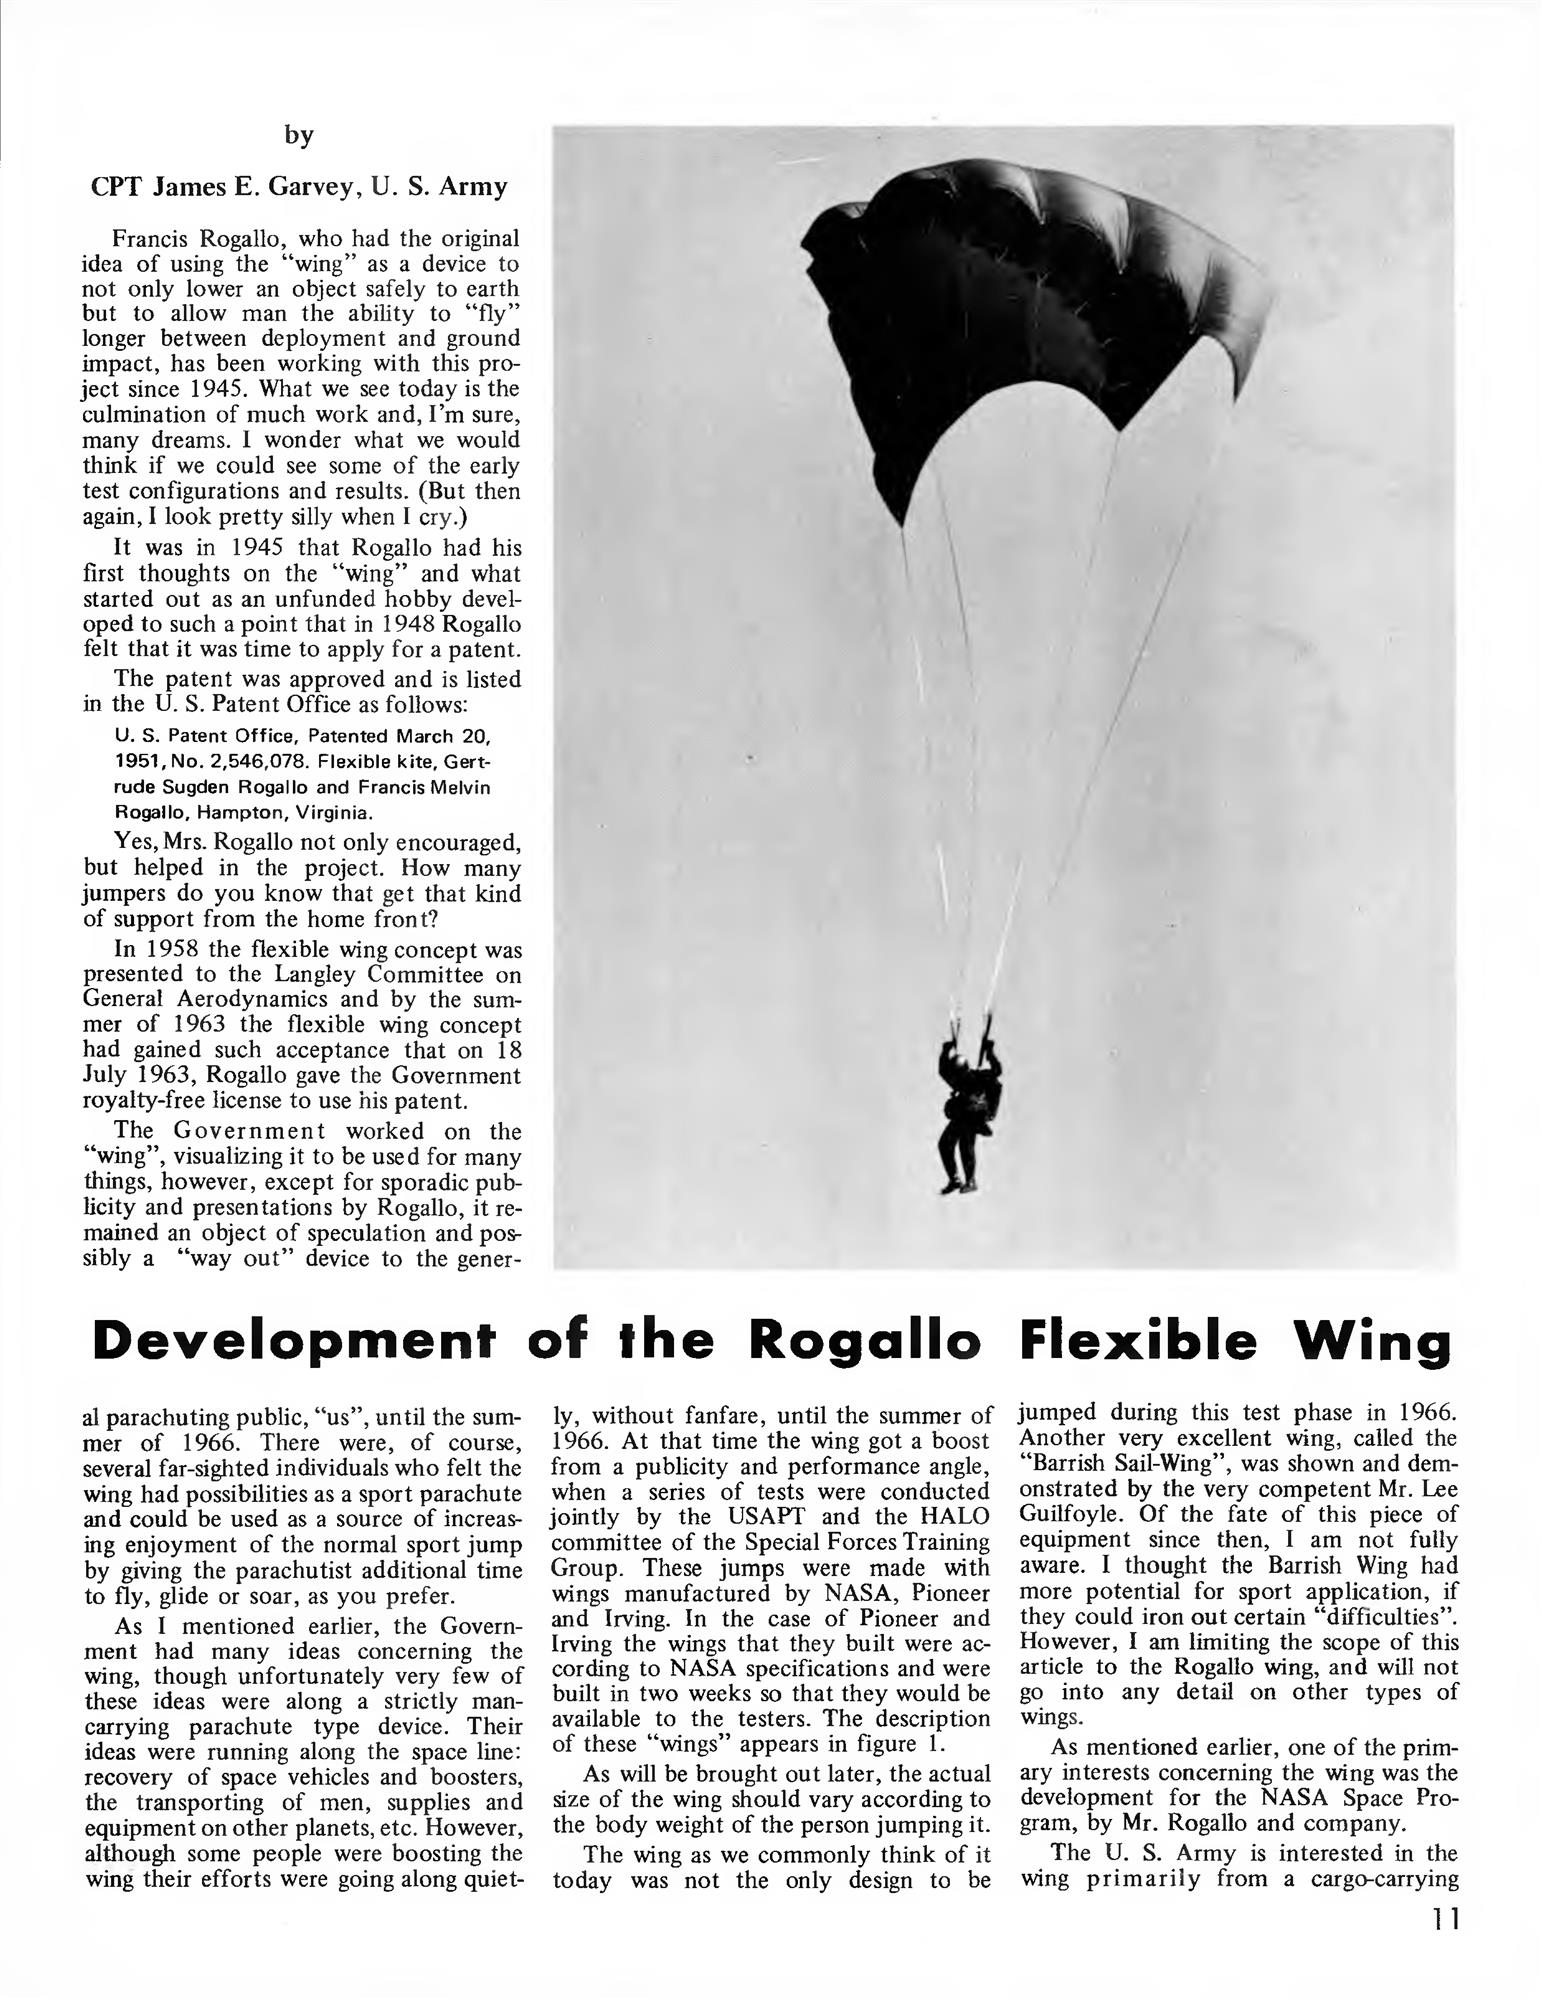 Development of the Rogallo Flexible Wing